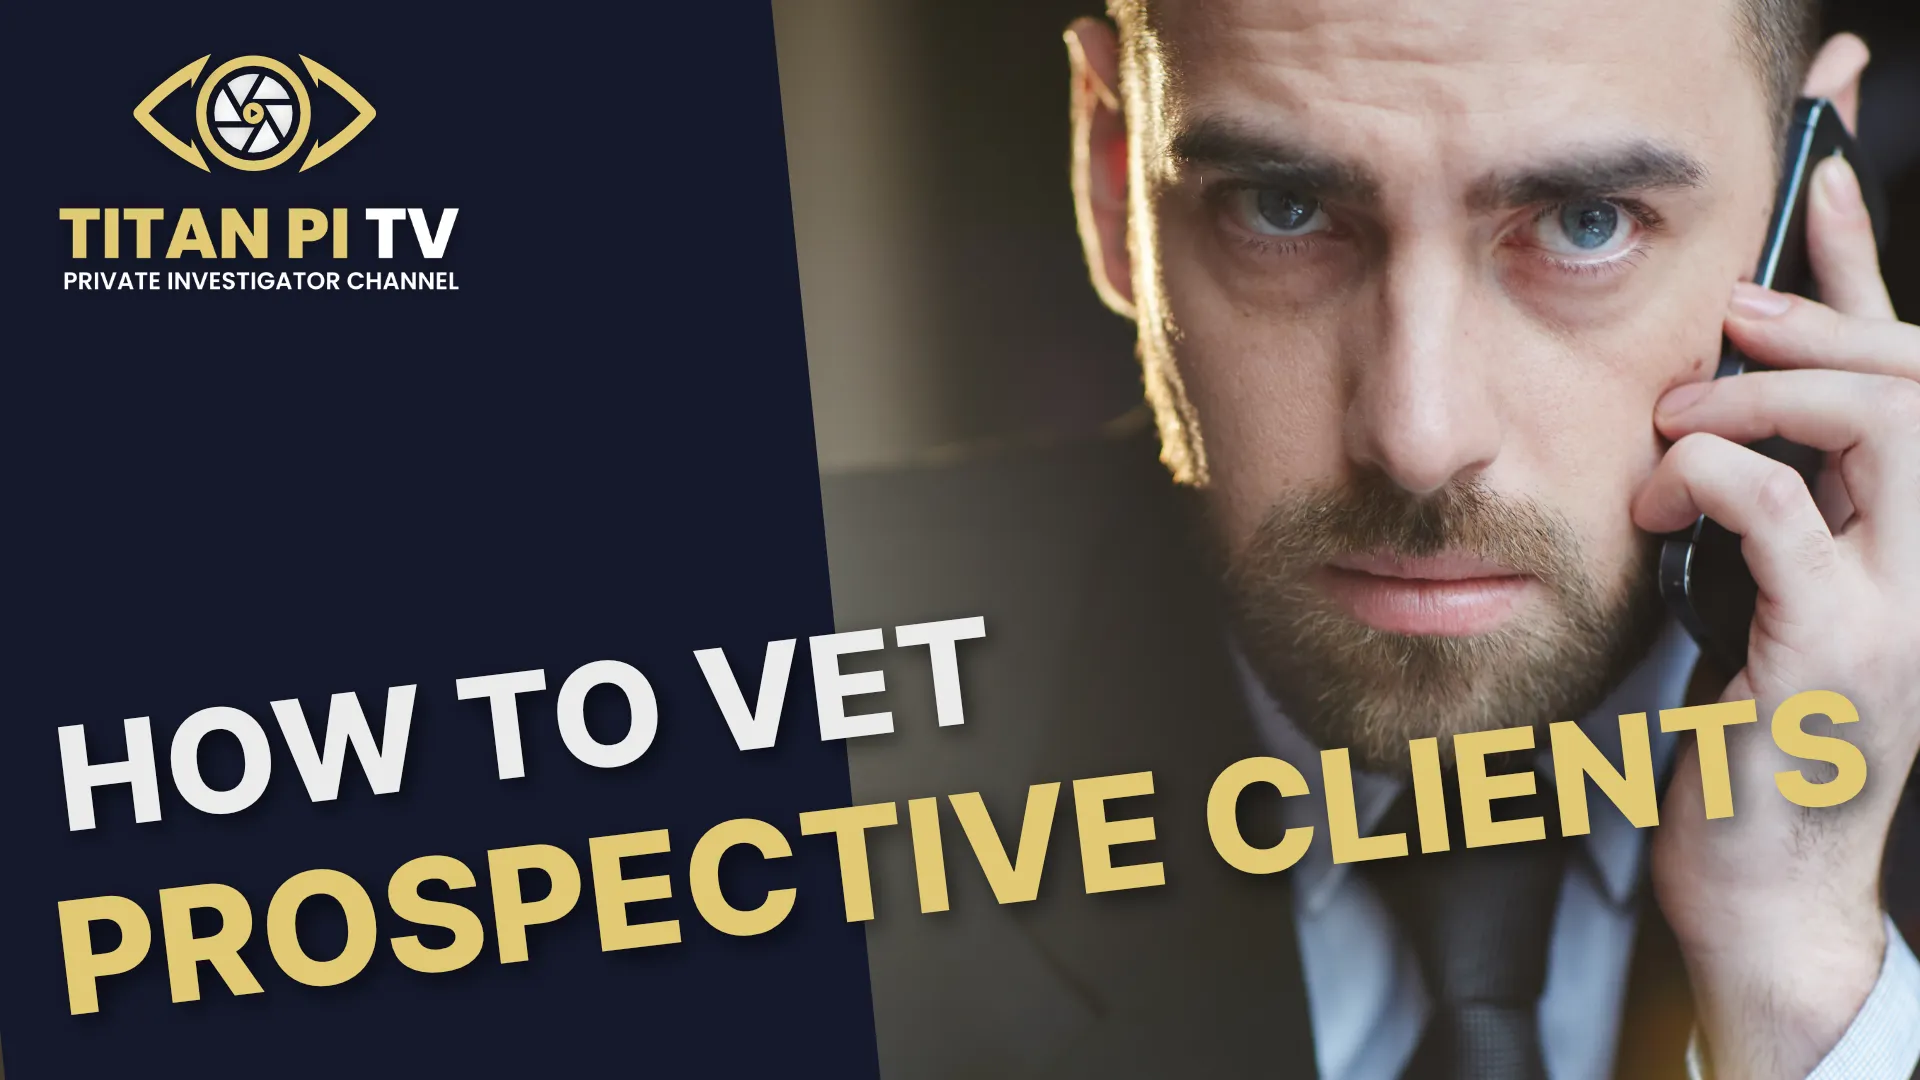 How to vet prospective clients Episode 40 | Titan PI TV